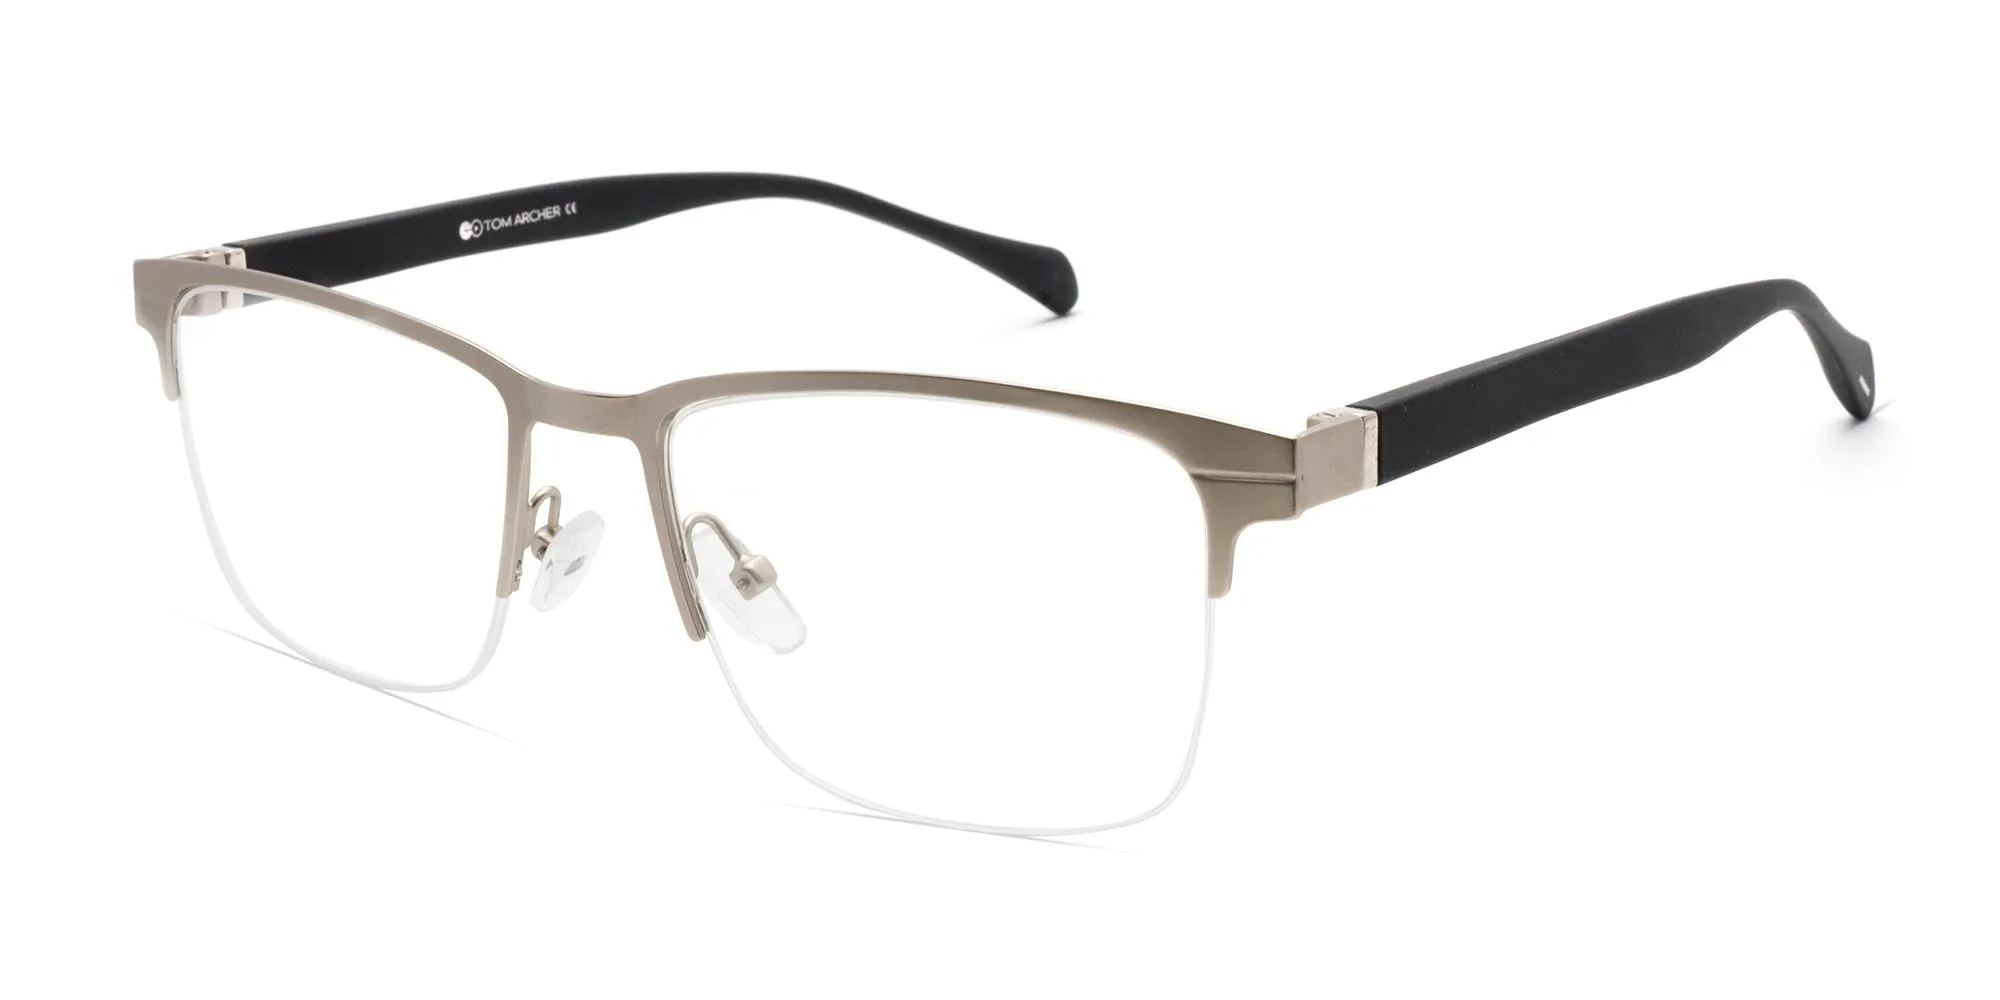 black and silver half rim rectangular glasses-2